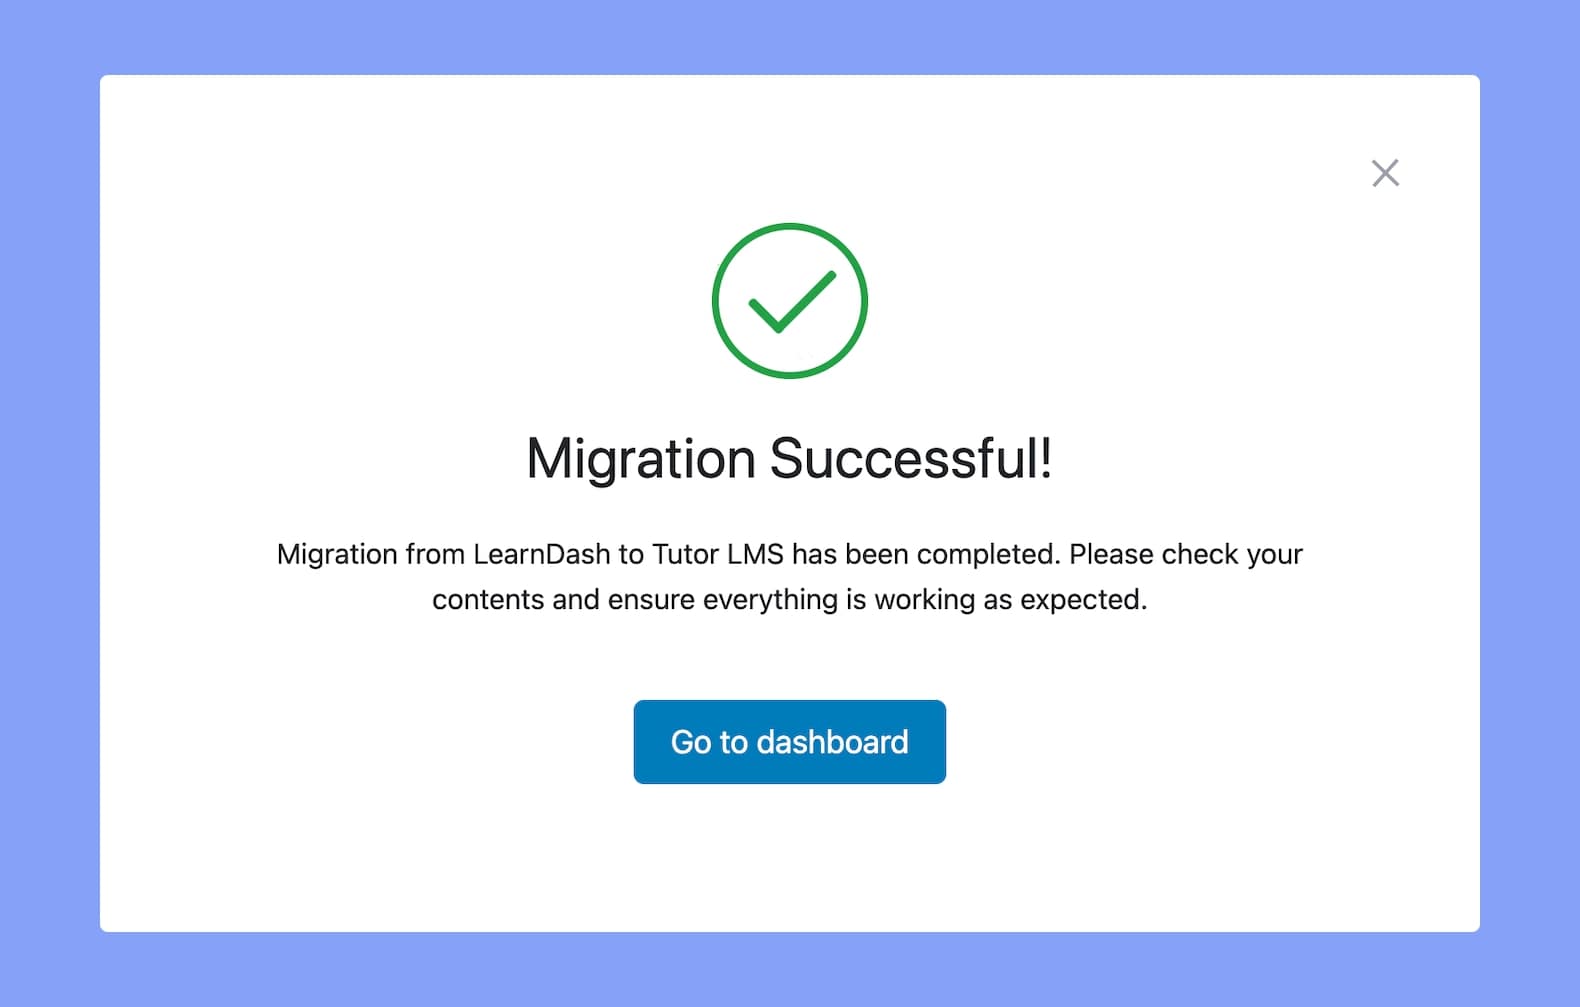 Tutor LMS LearnDash Migration - Migration Successful Pop-up